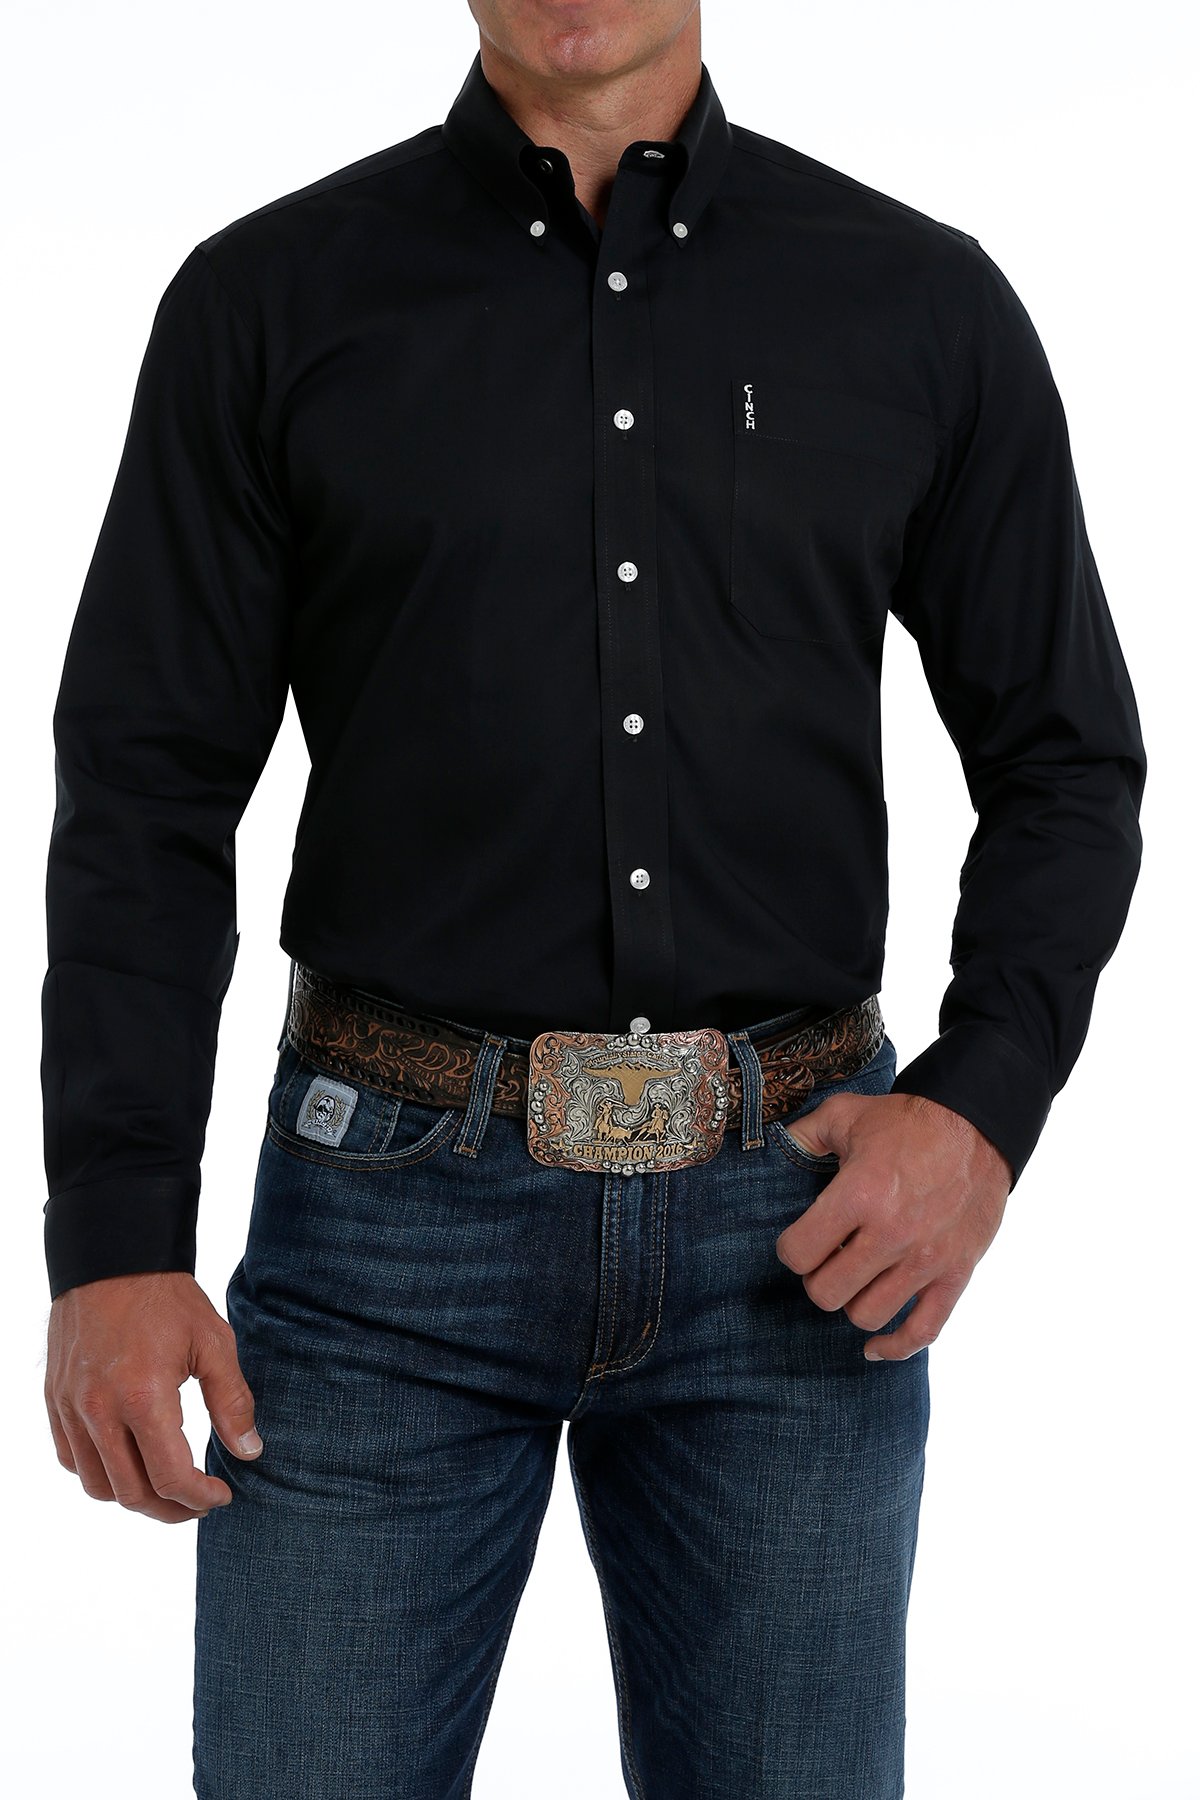 Men's Cinch Modern Fit Black Button Down Shirt